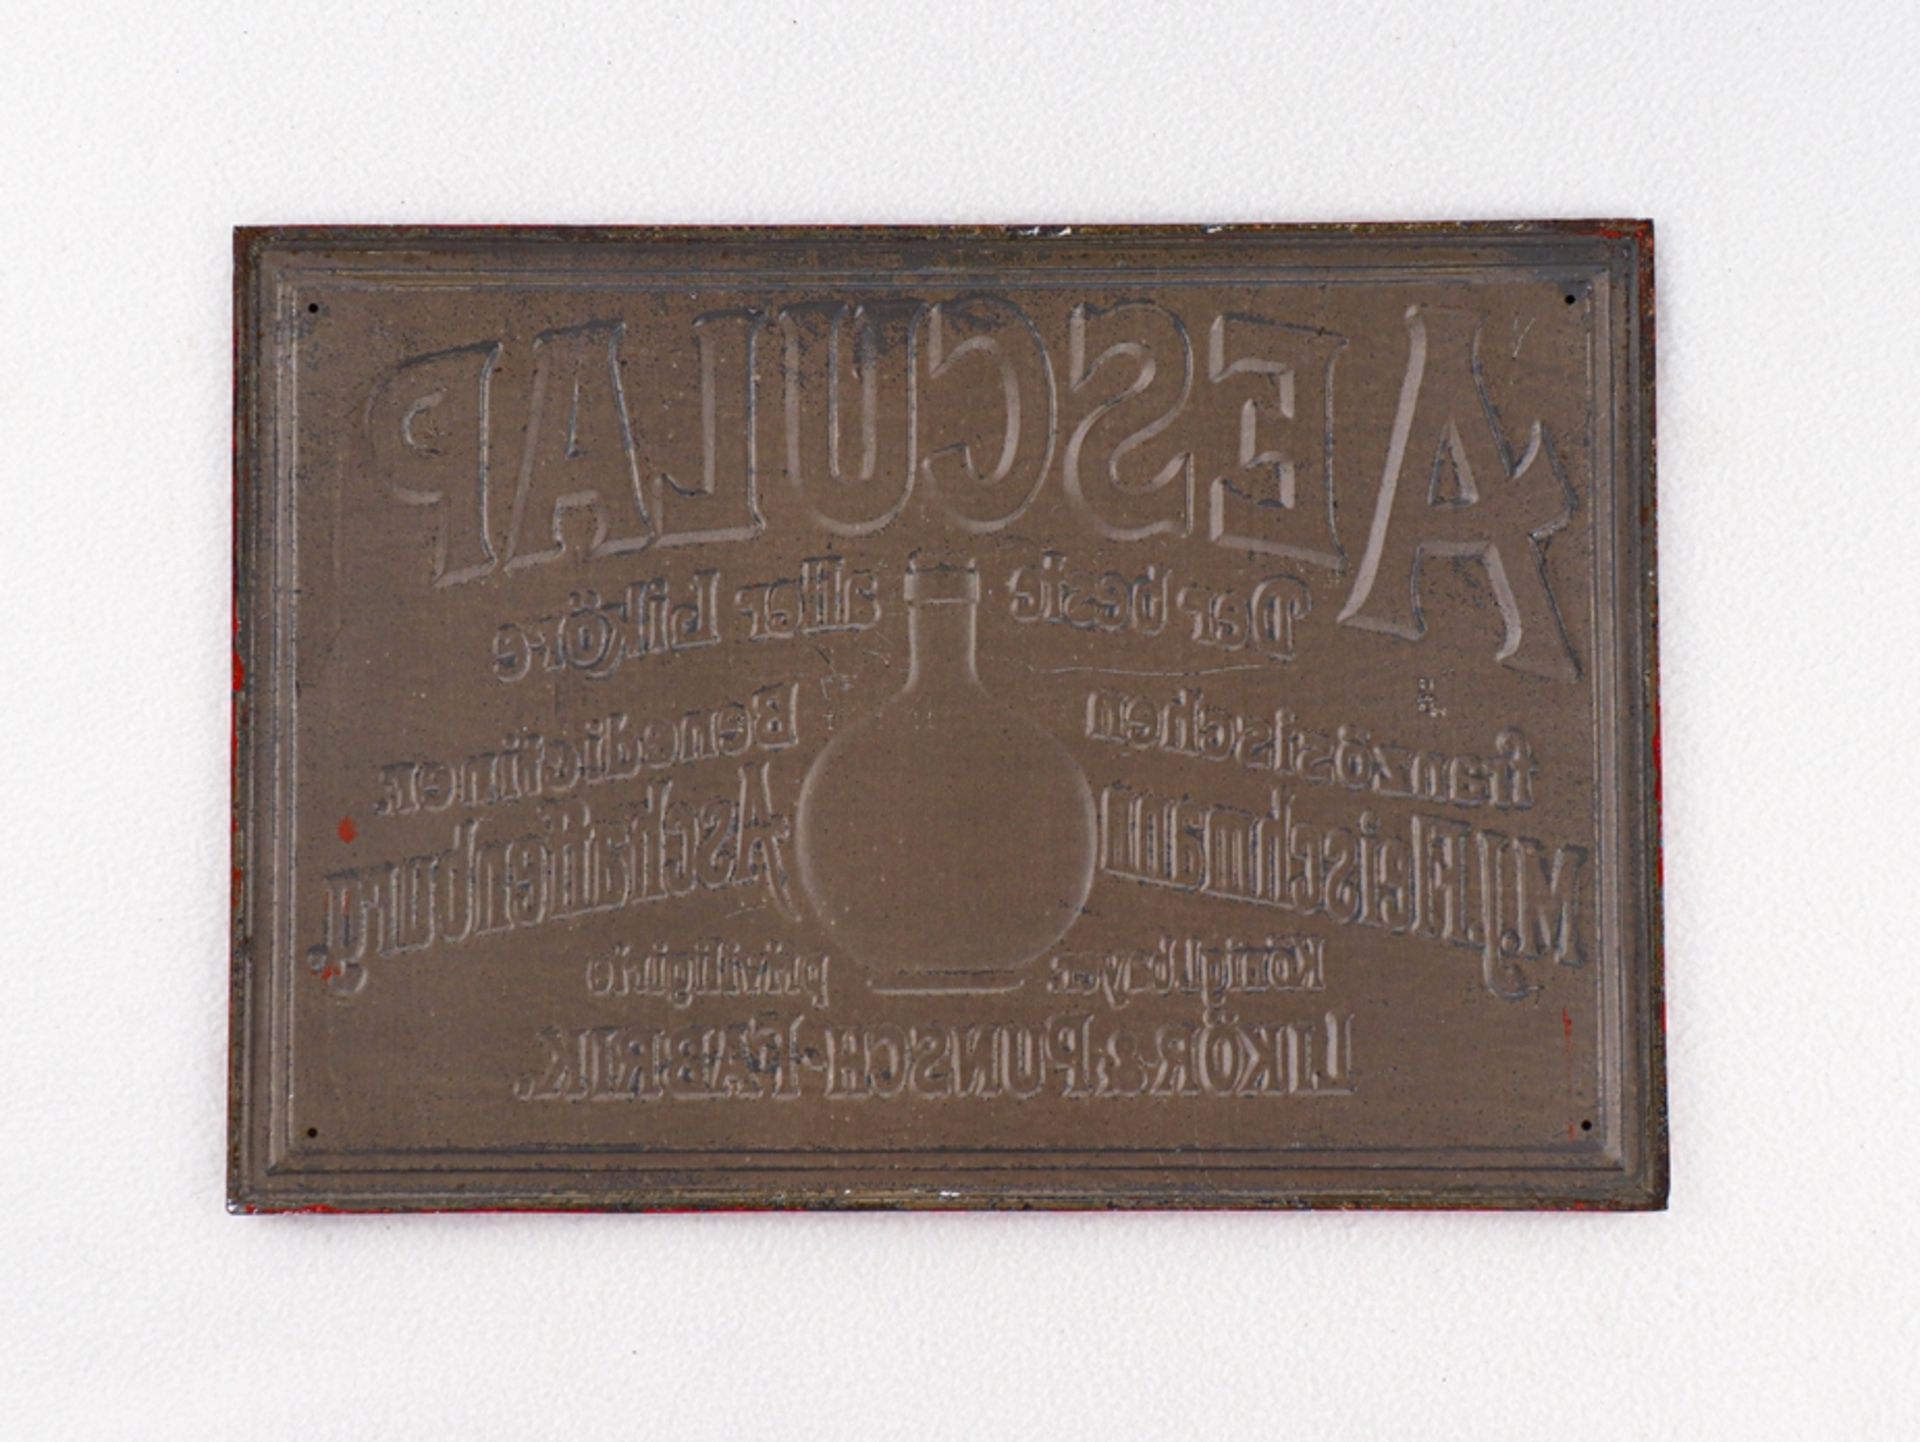 Blechschild Aesculap, der beste aller Liköre, Aschaffenburg, um 1900 - Bild 2 aus 3